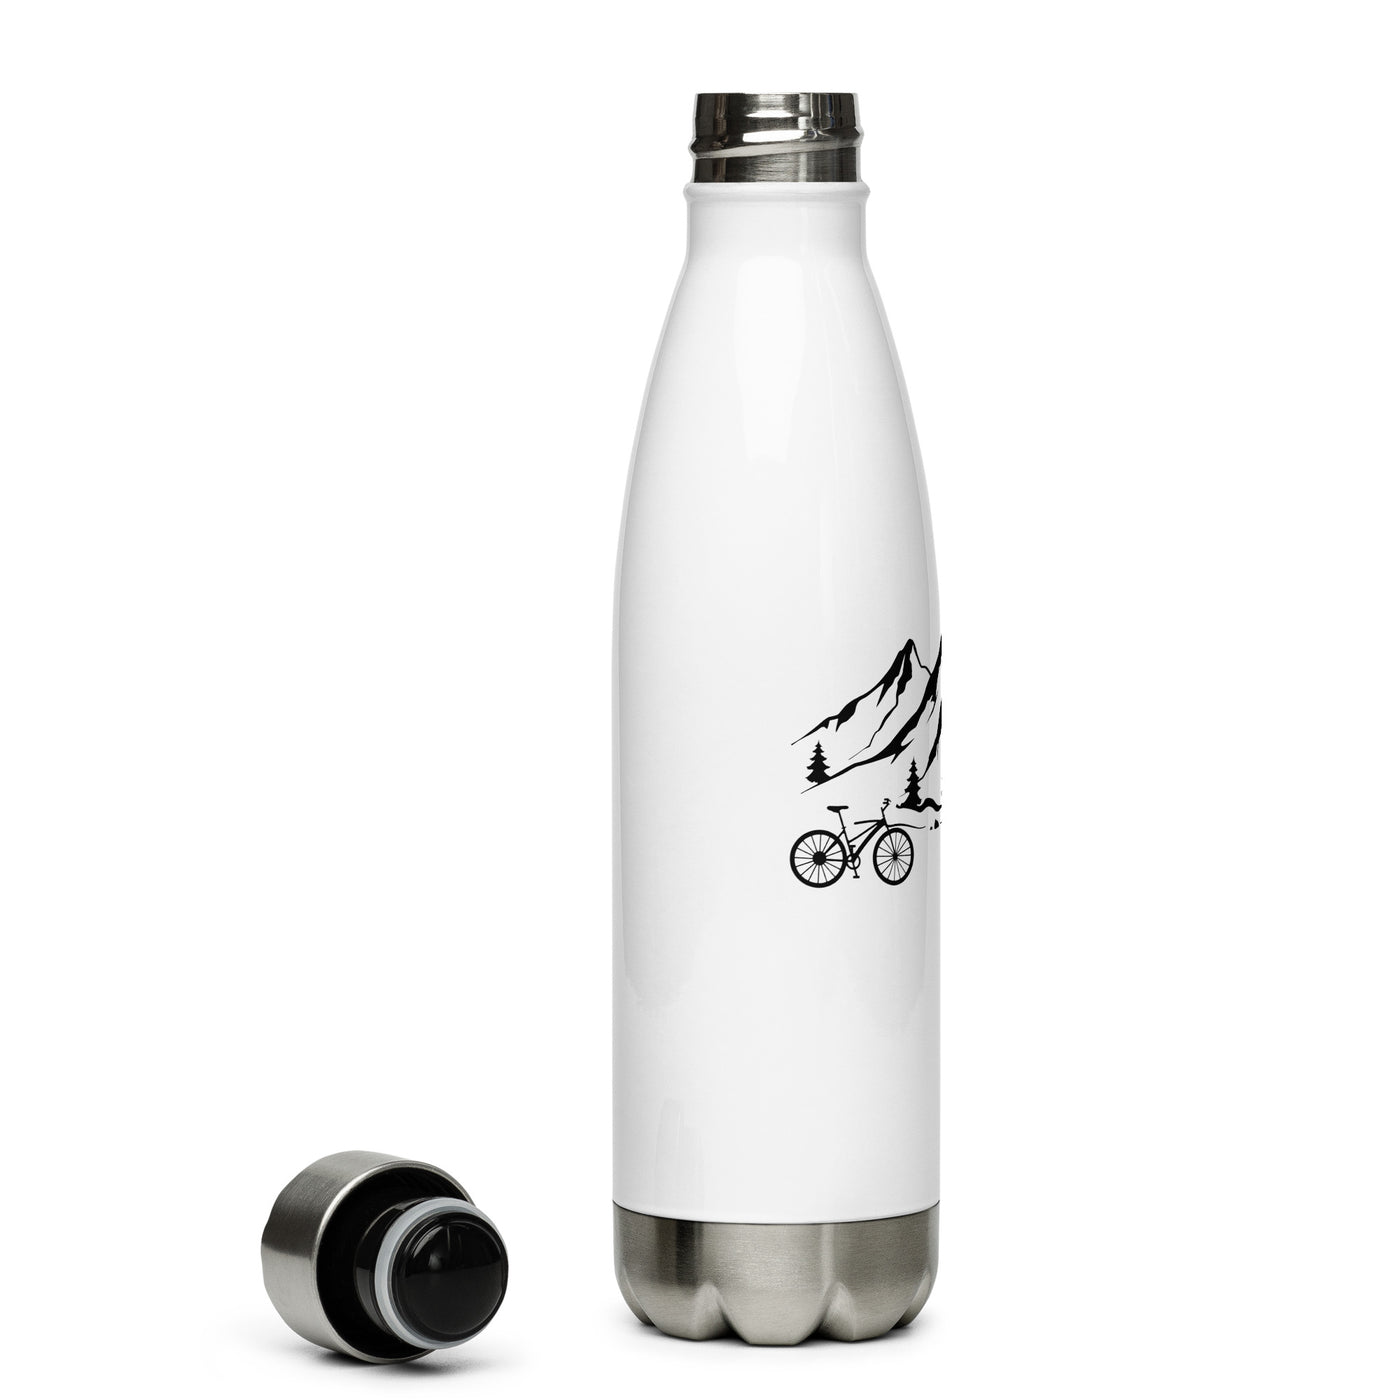 Berg Und Fahrrad - Edelstahl Trinkflasche fahrrad